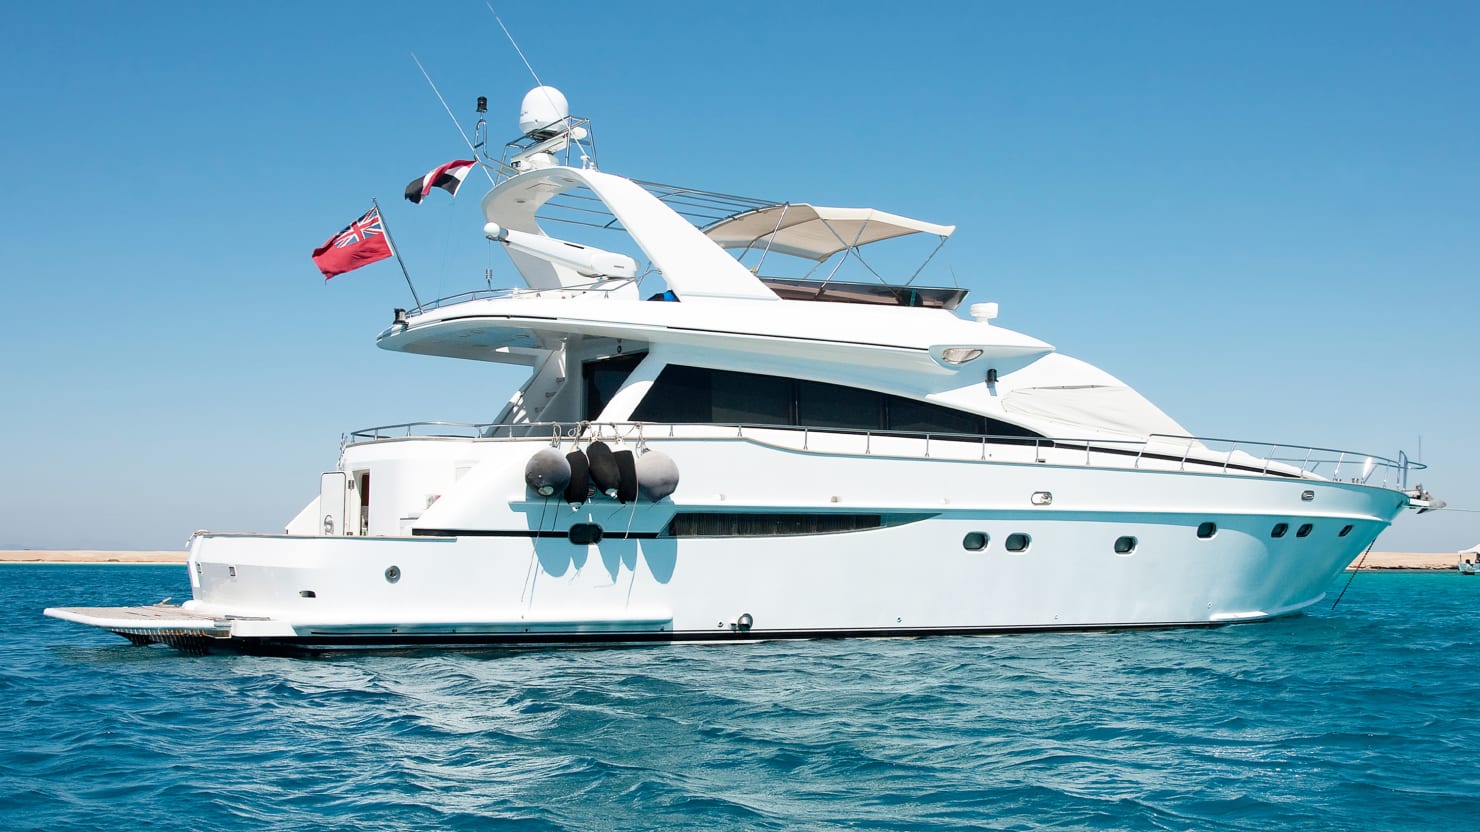 U S Publication Throws Luxury Saudi Yacht Party Near Anniversary of